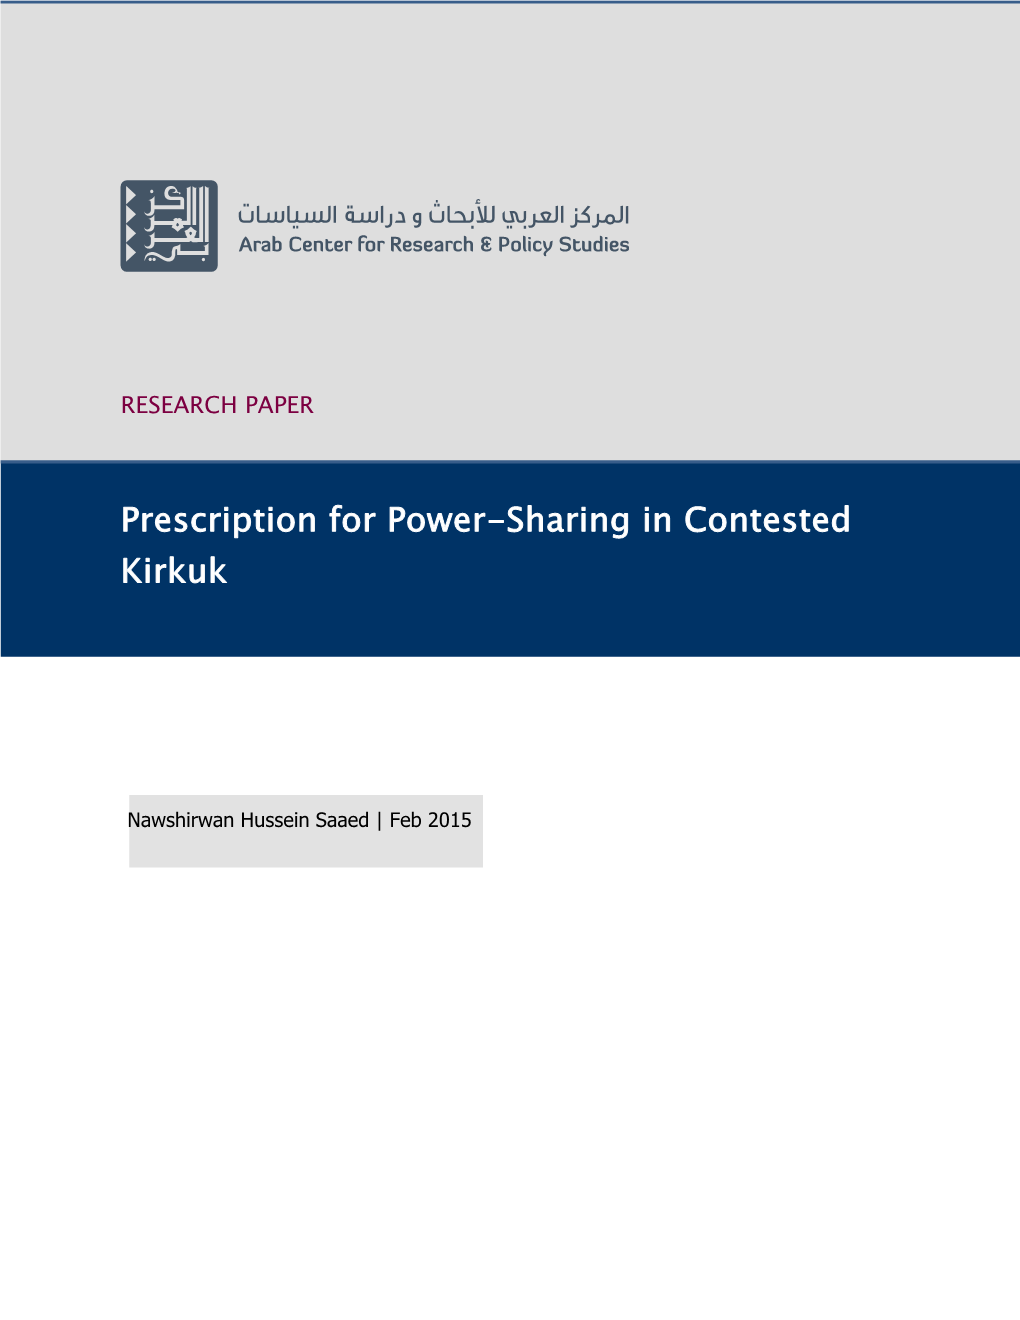 Prescription for Power-Sharing in Contested Kirkuk